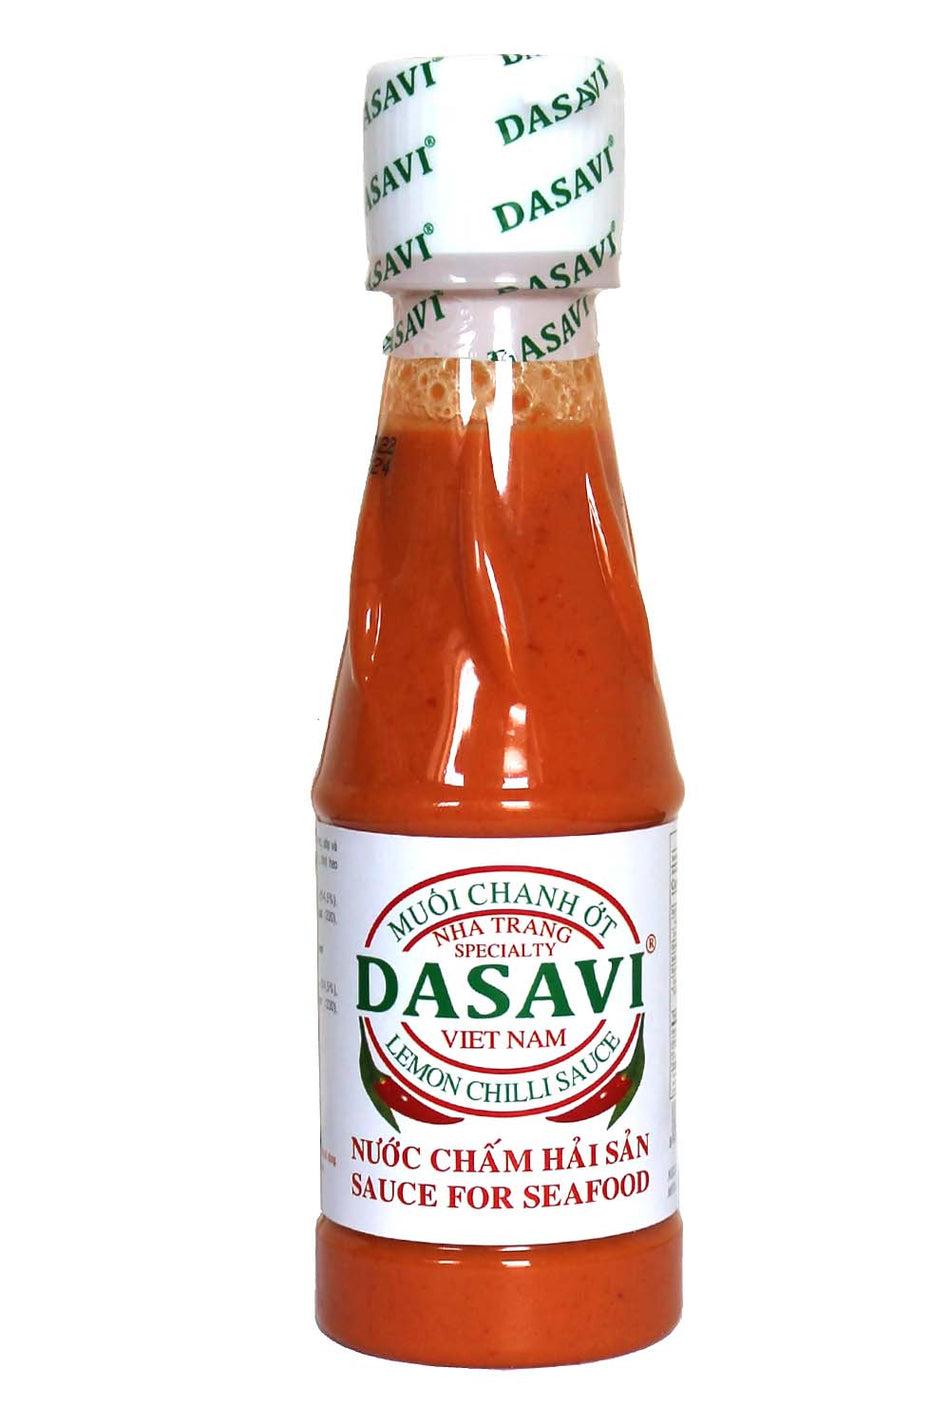 Dasavi Lemon Chili Sauce